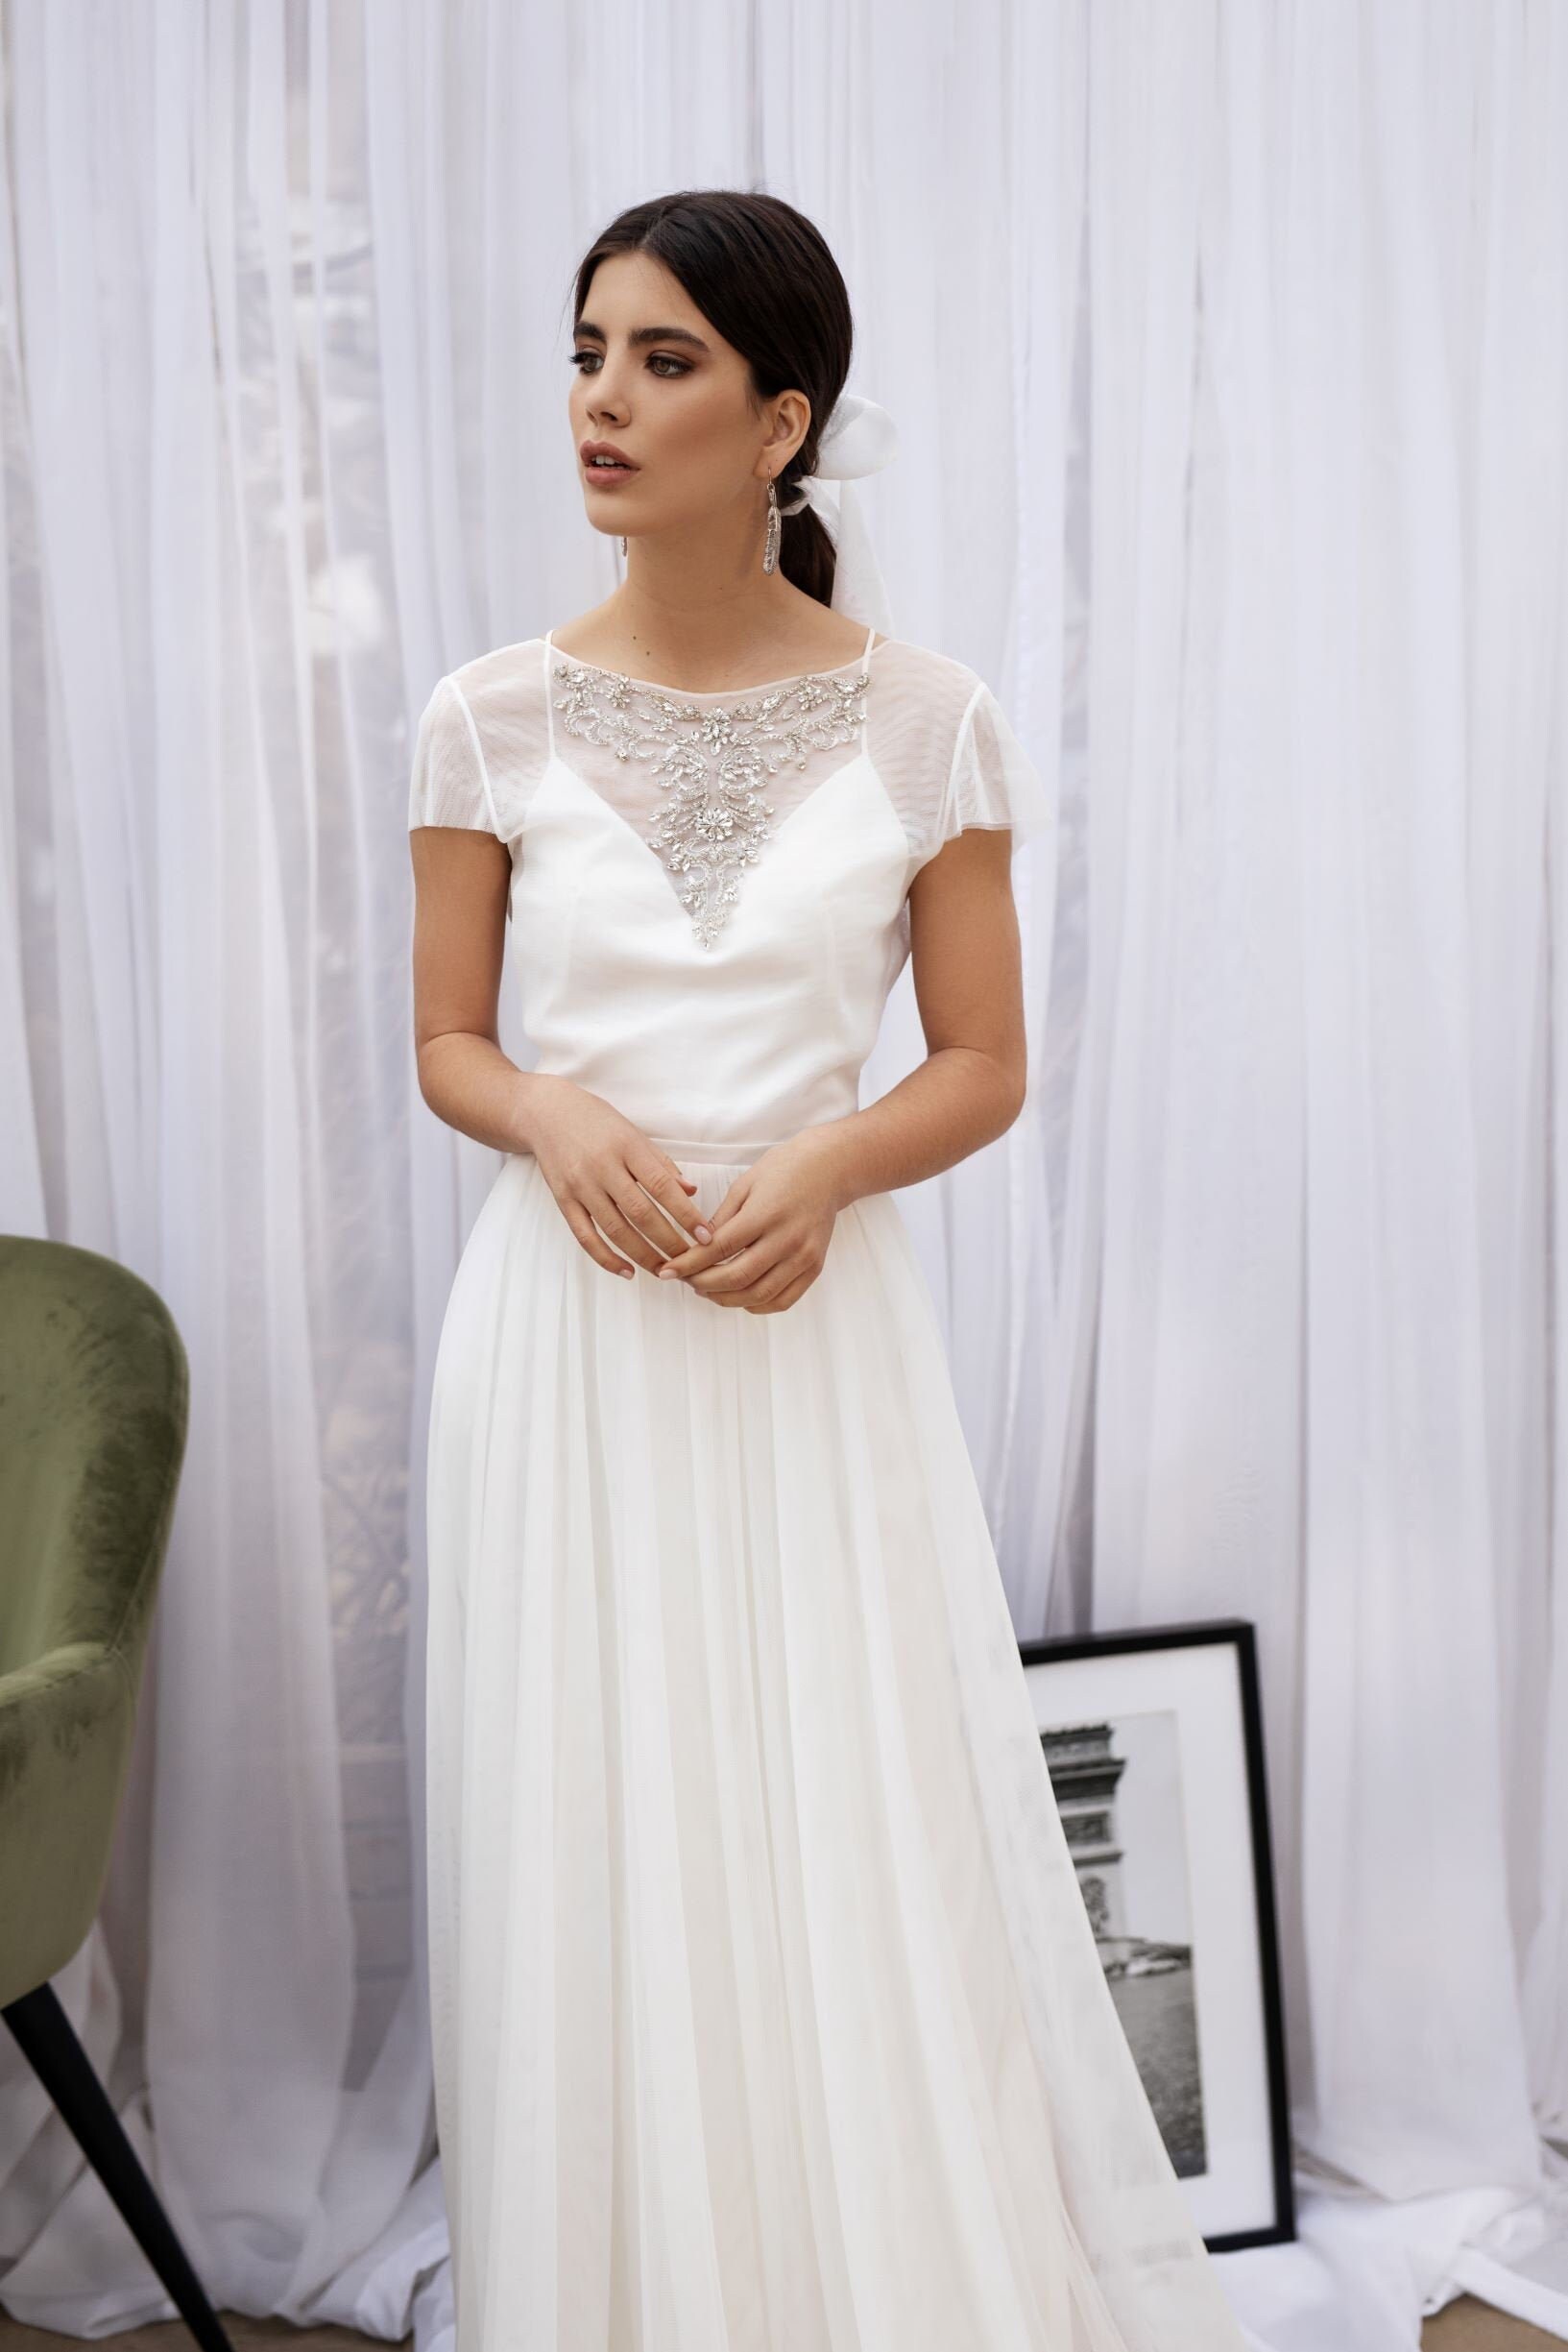 Modest wedding dress minimalist bridal gown embroidered | Etsy